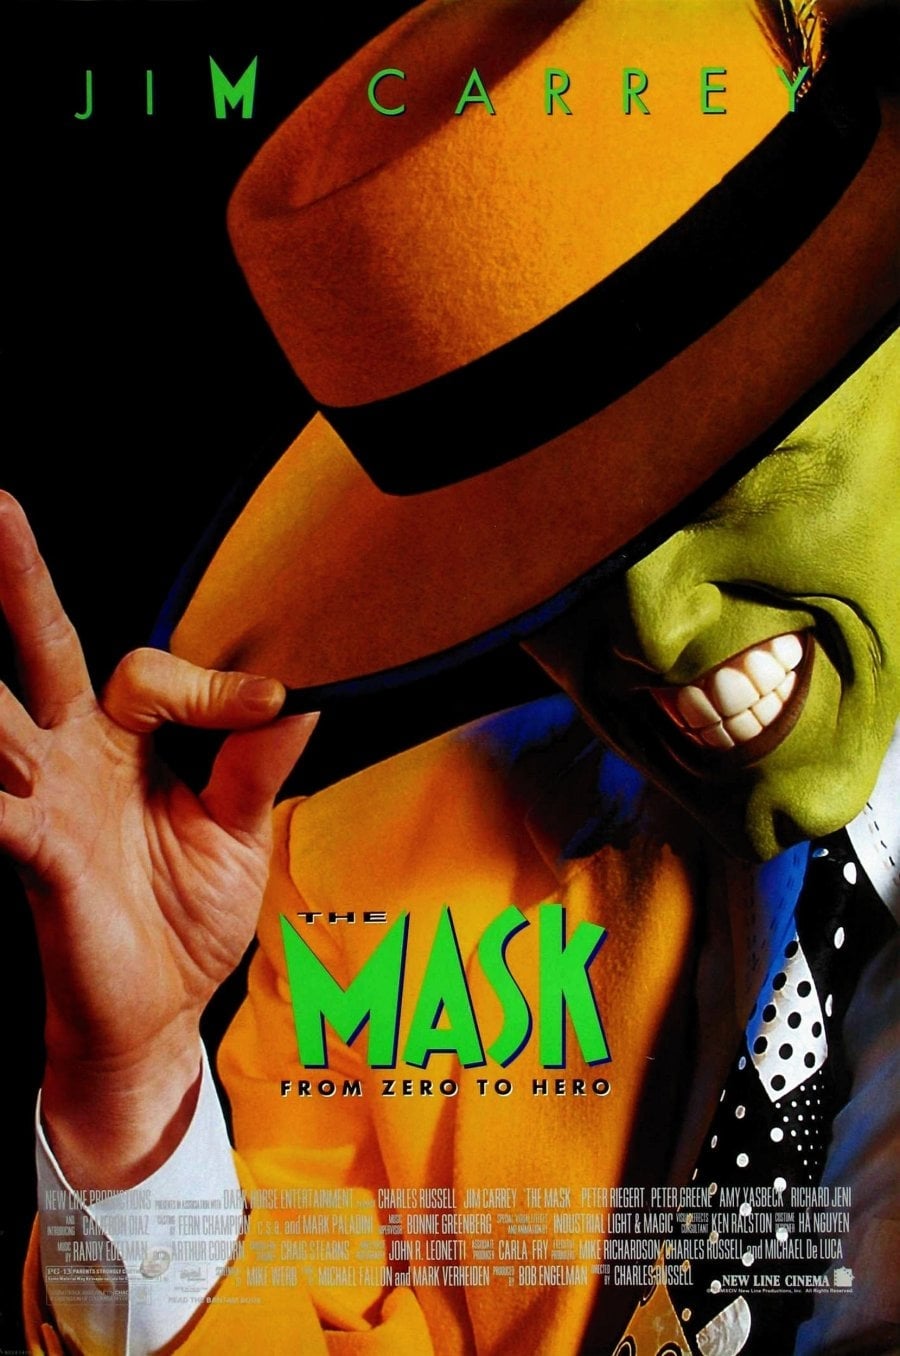 EN - The Mask (1994) JIM CARREY